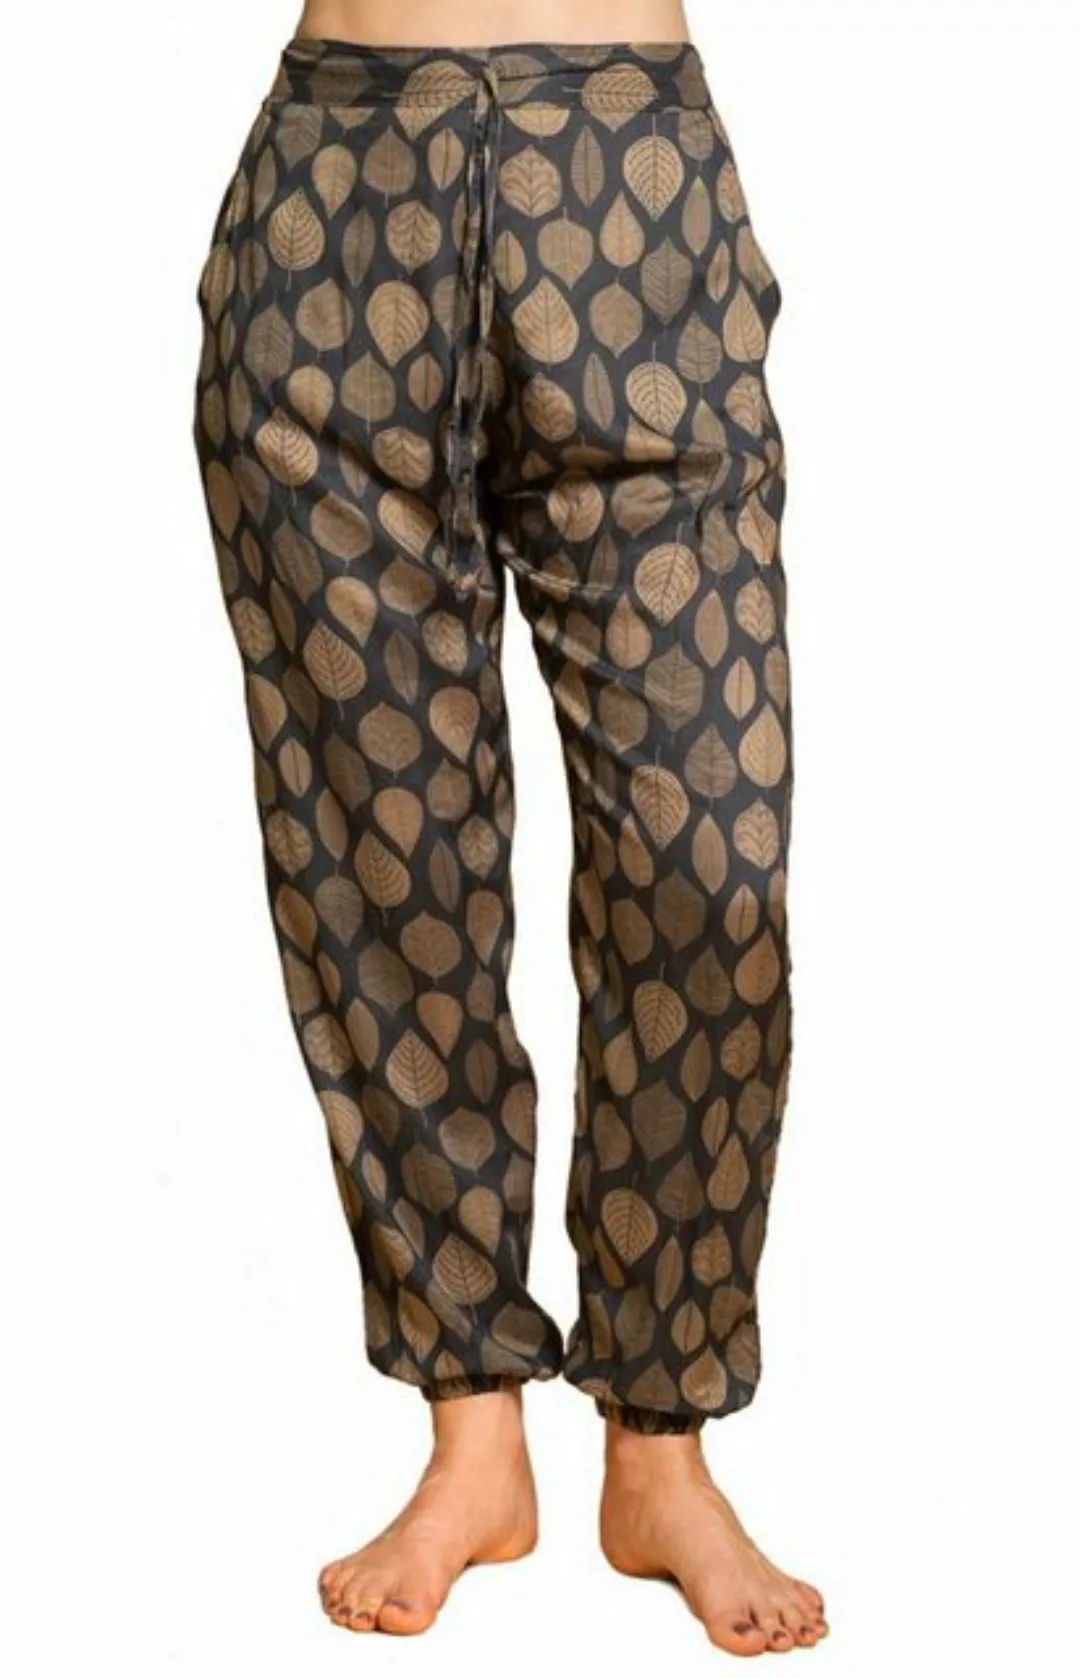 PANASIAM Stoffhose Relaxed pants geometric style aus 100 %Baumwolle bequeme günstig online kaufen